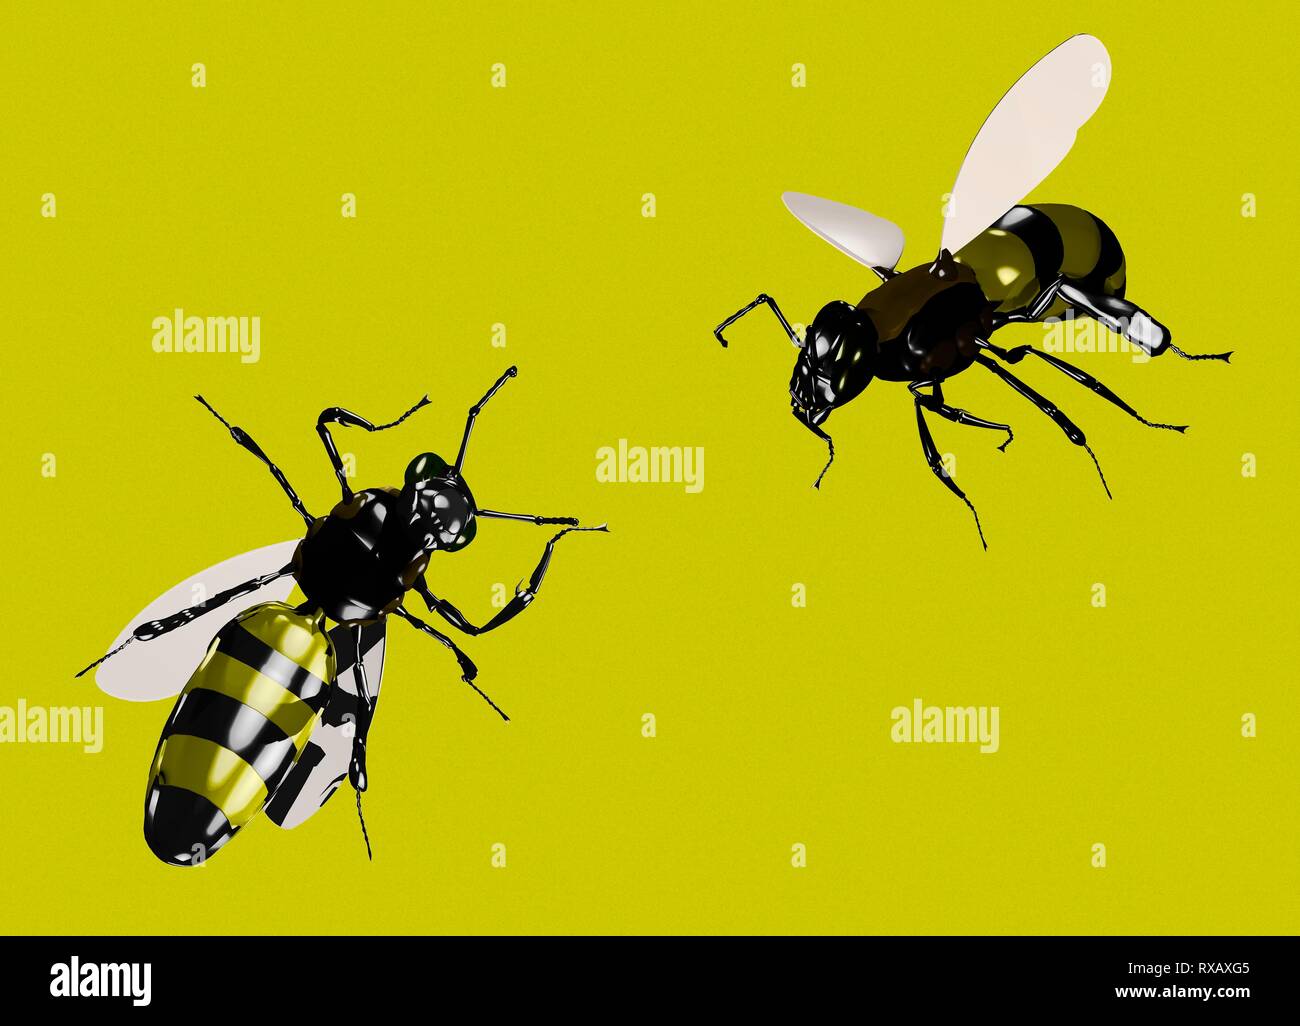 Bees, illustration Stock Photo